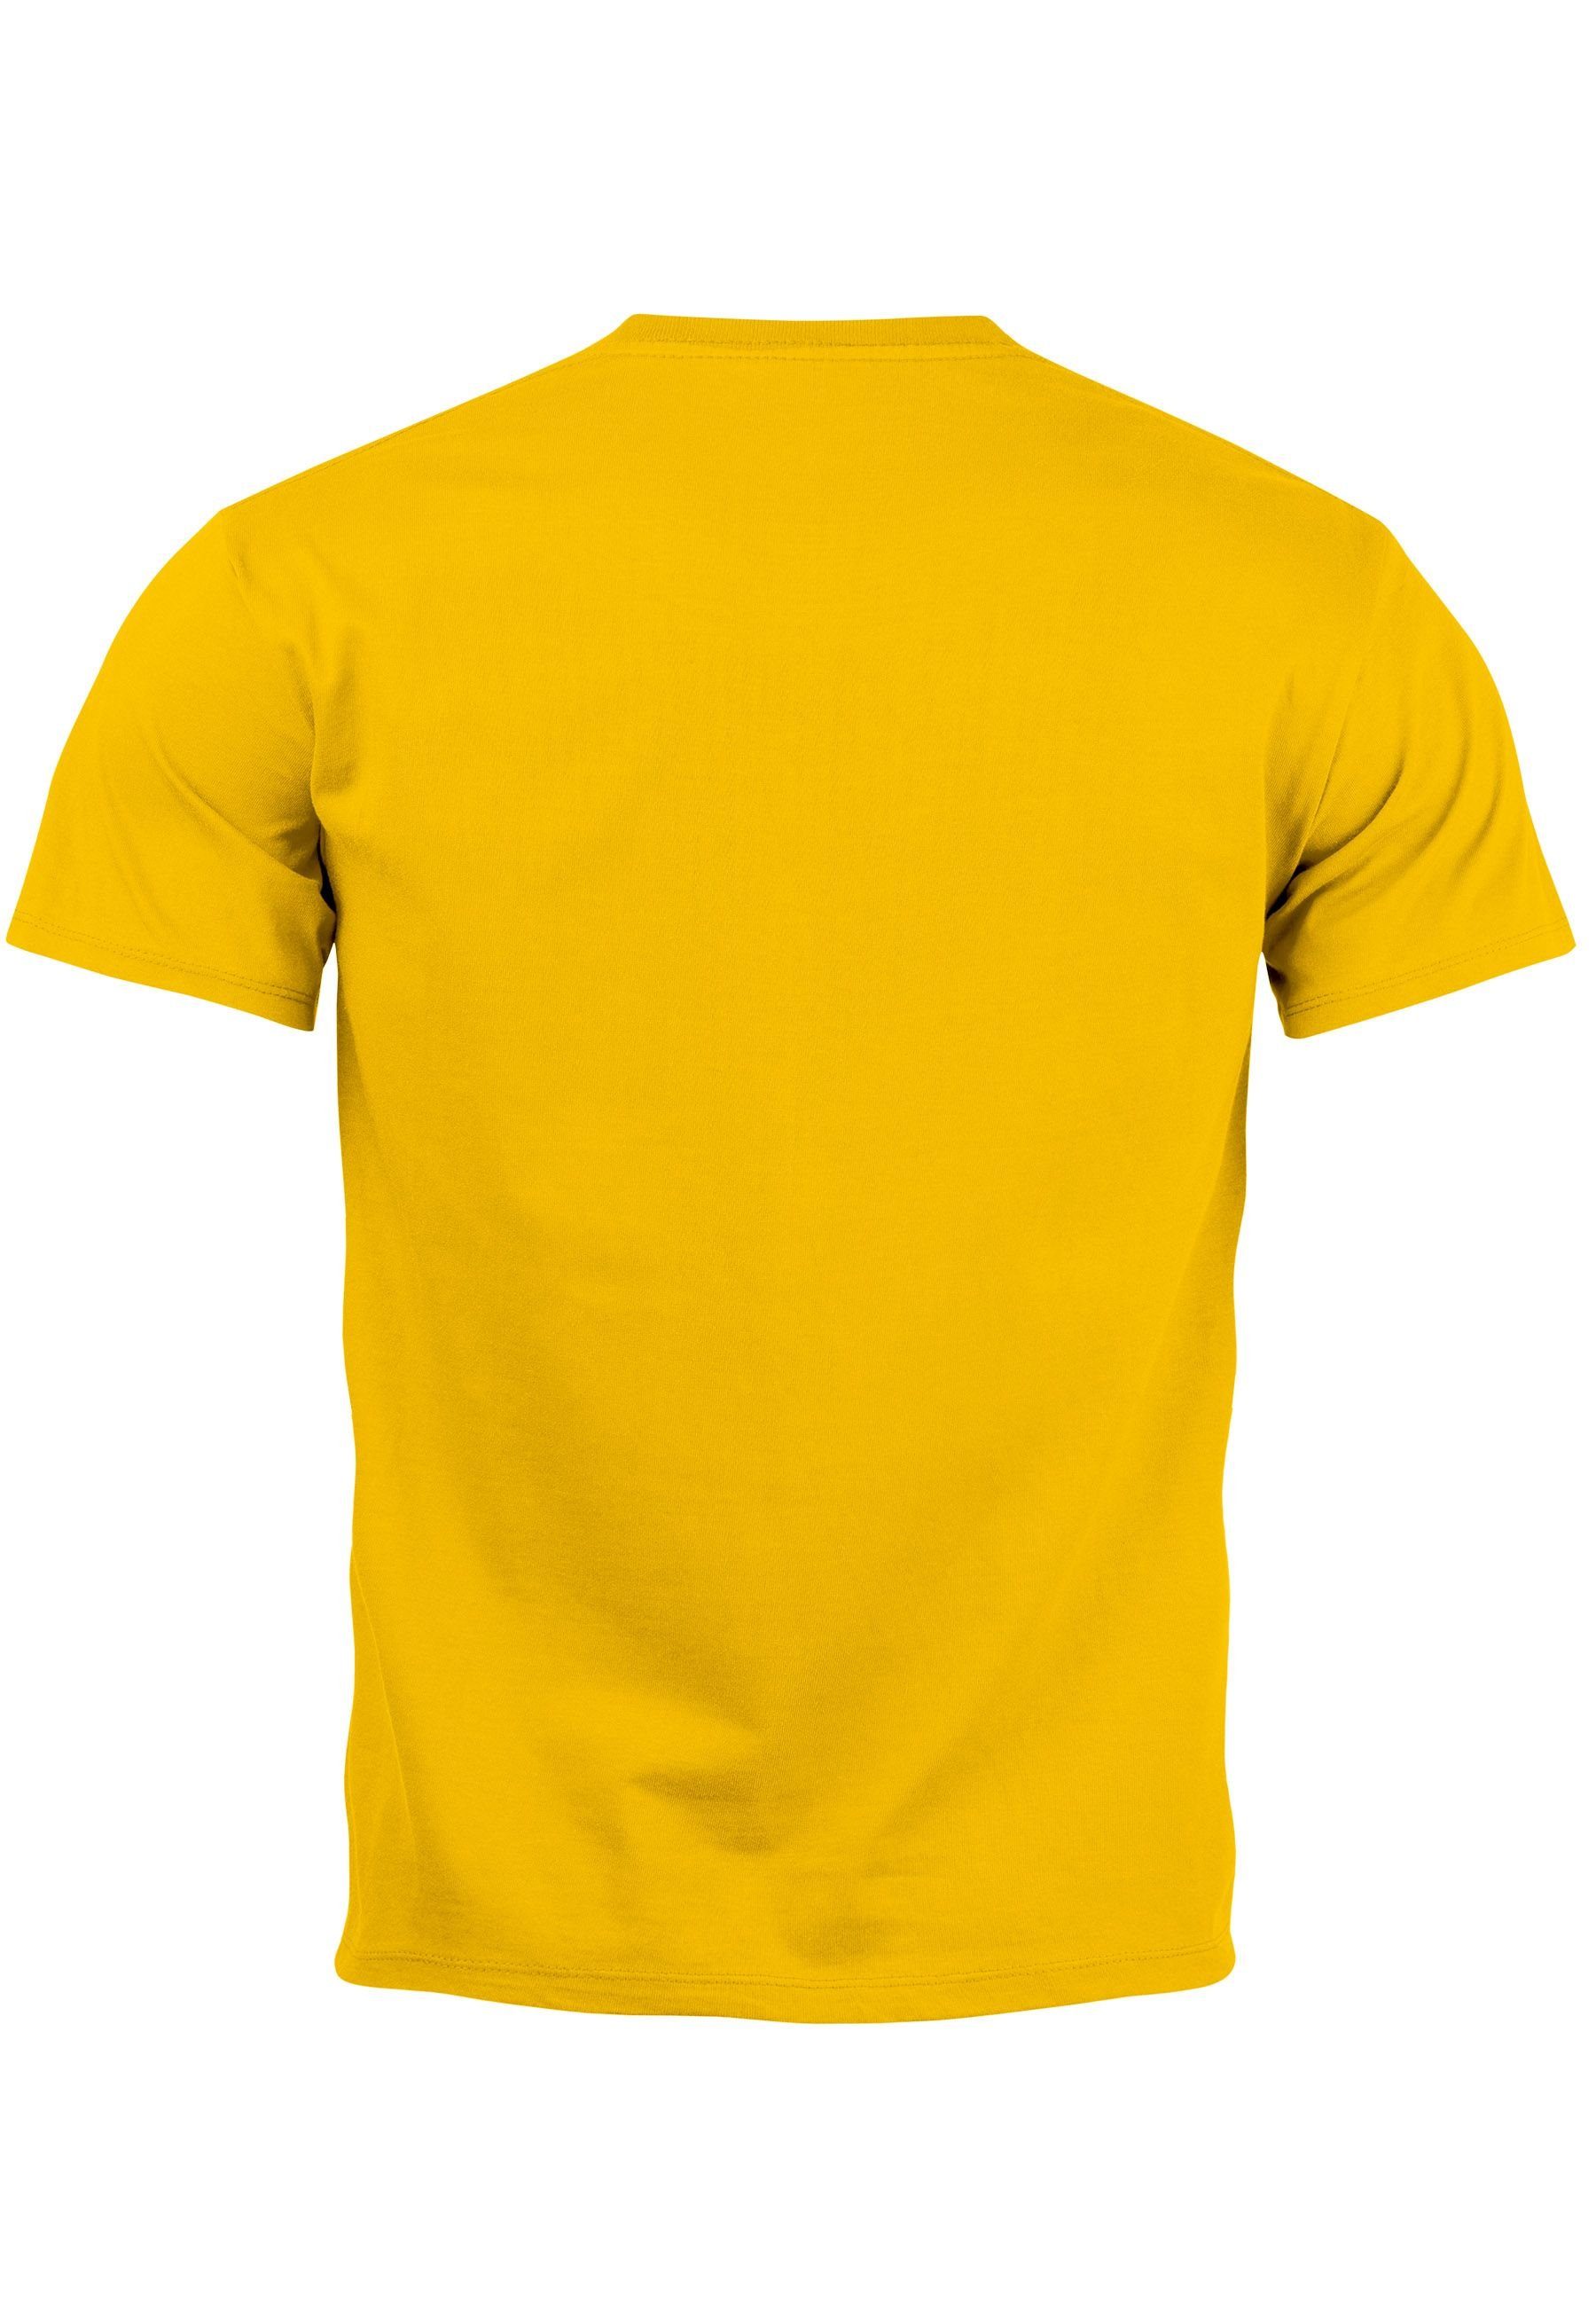 Top mit Foto California Herren T-Shirt Sommer Aufdruck Print-Shirt Print Print Neverless gelb Palmen Abstra